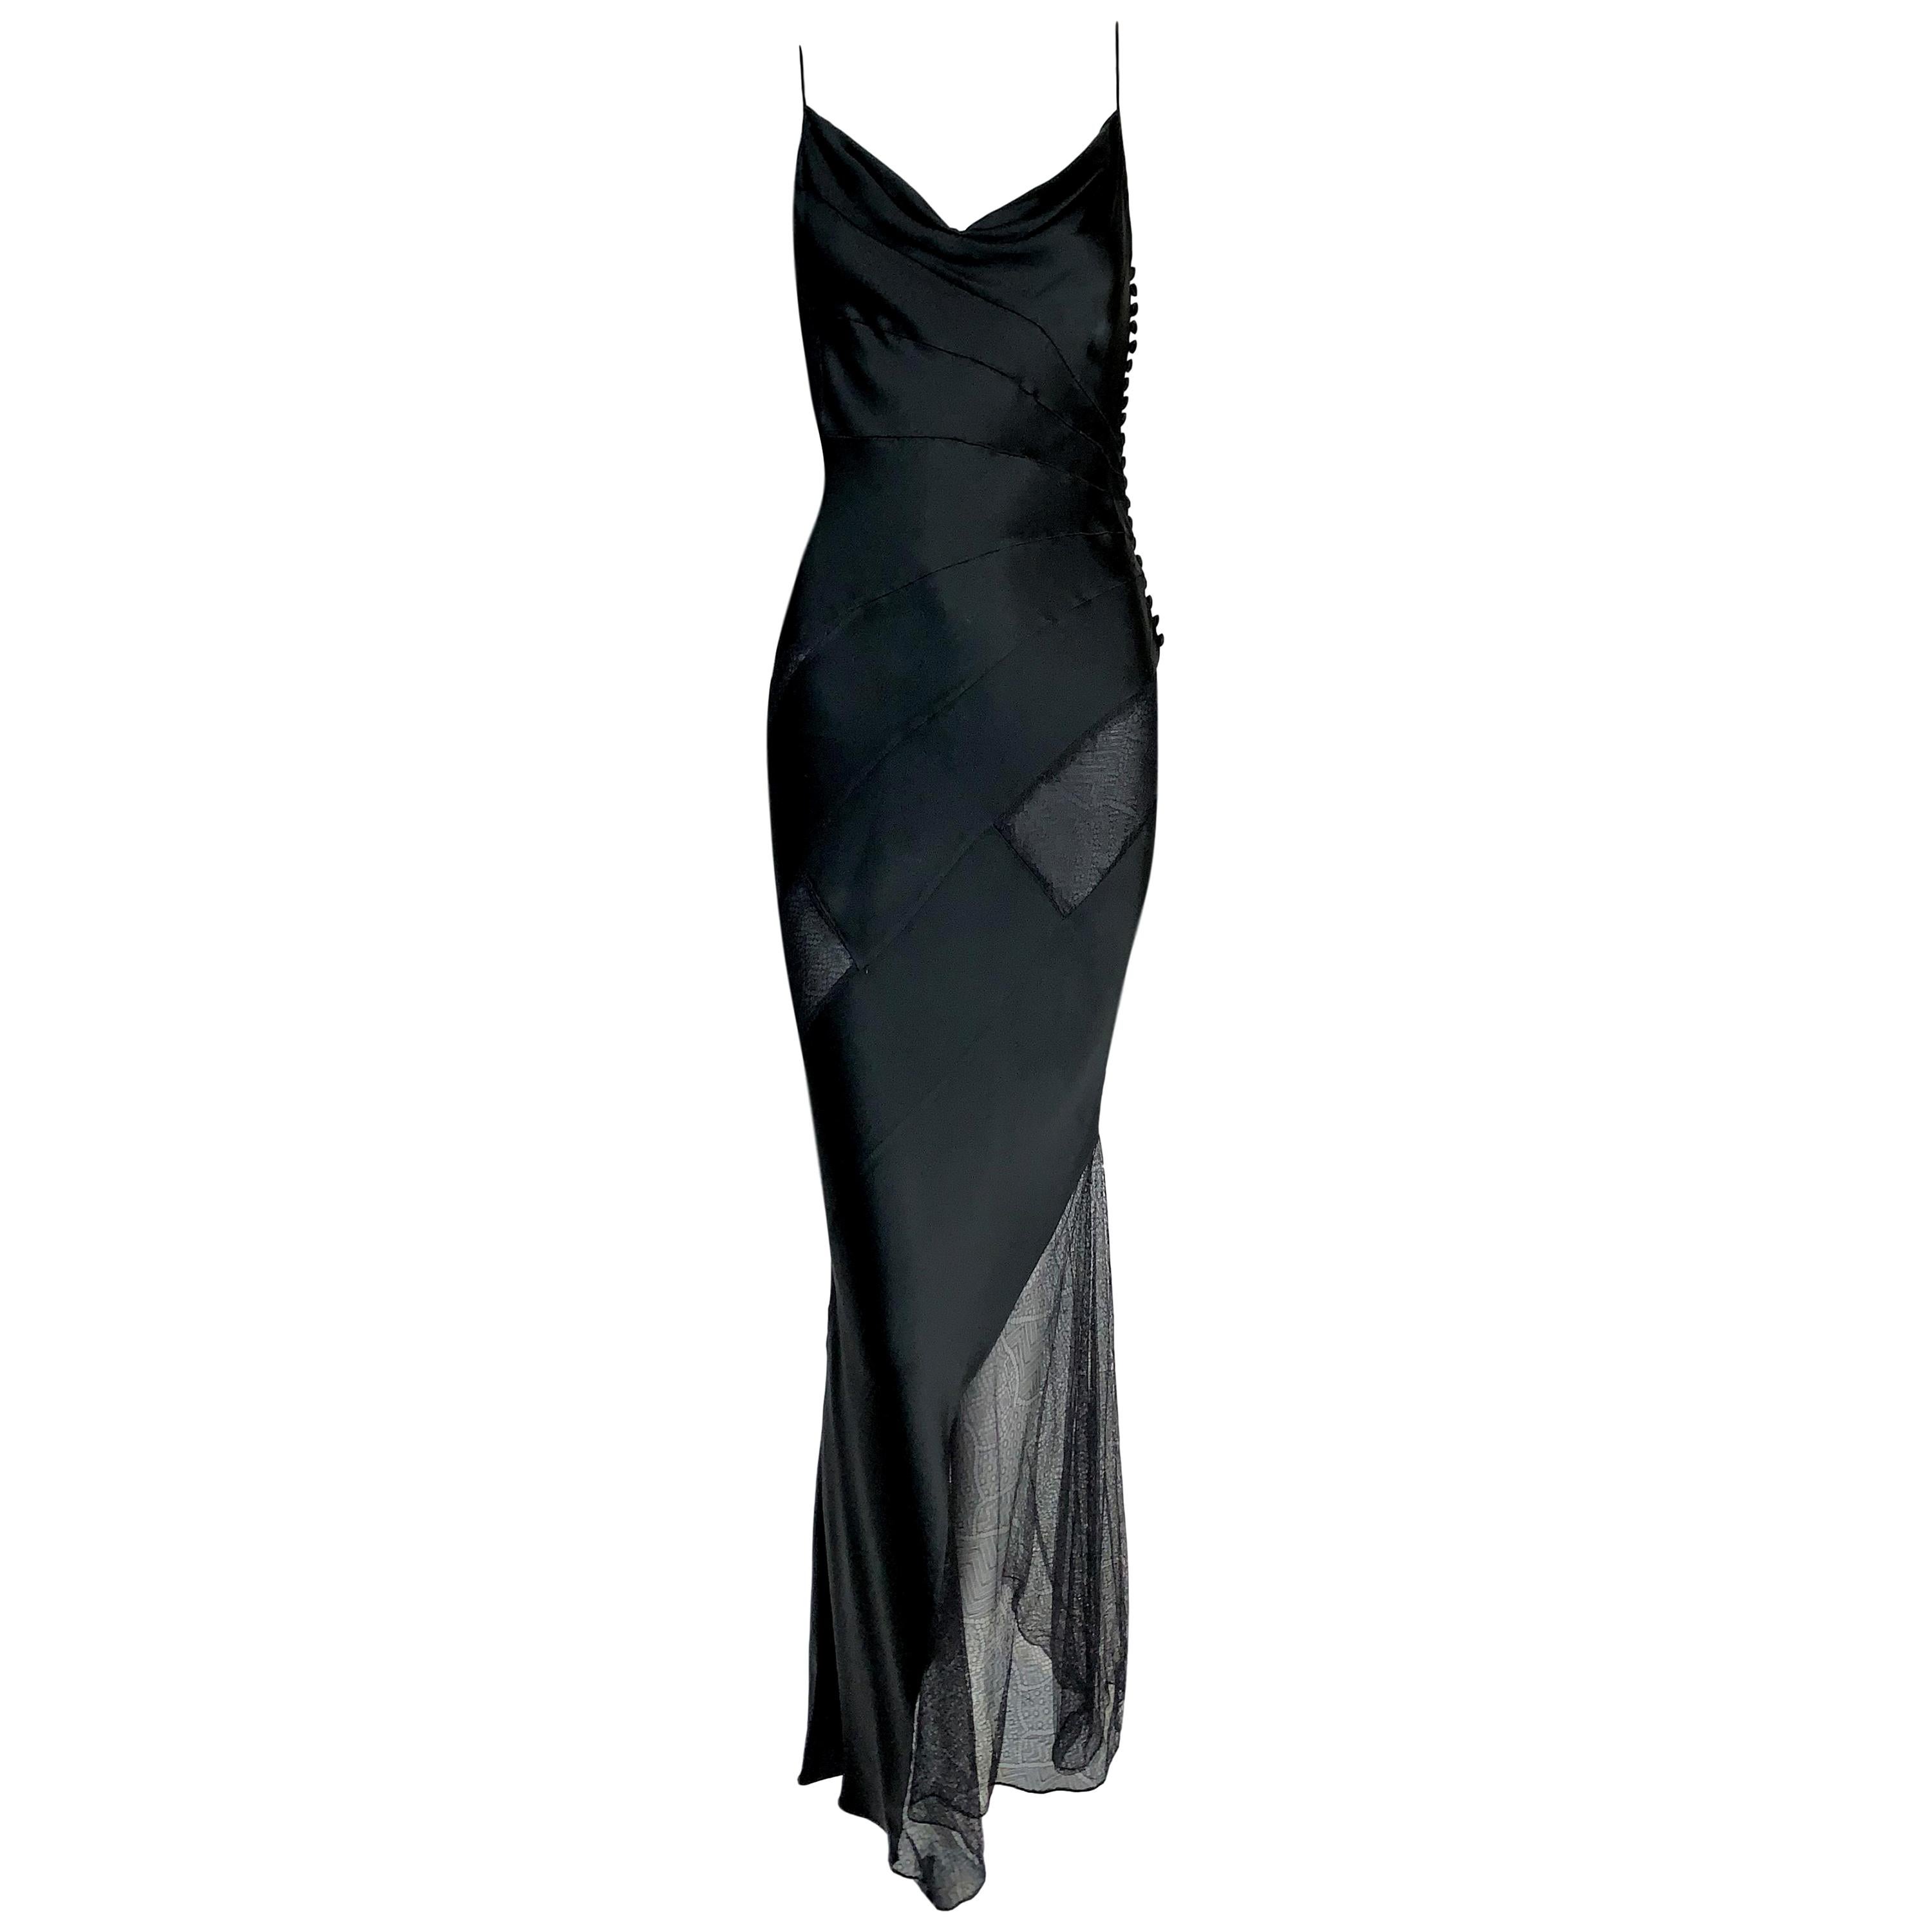 Cygne Noir Black Swan  Christian Dior  VA Explore The Collections